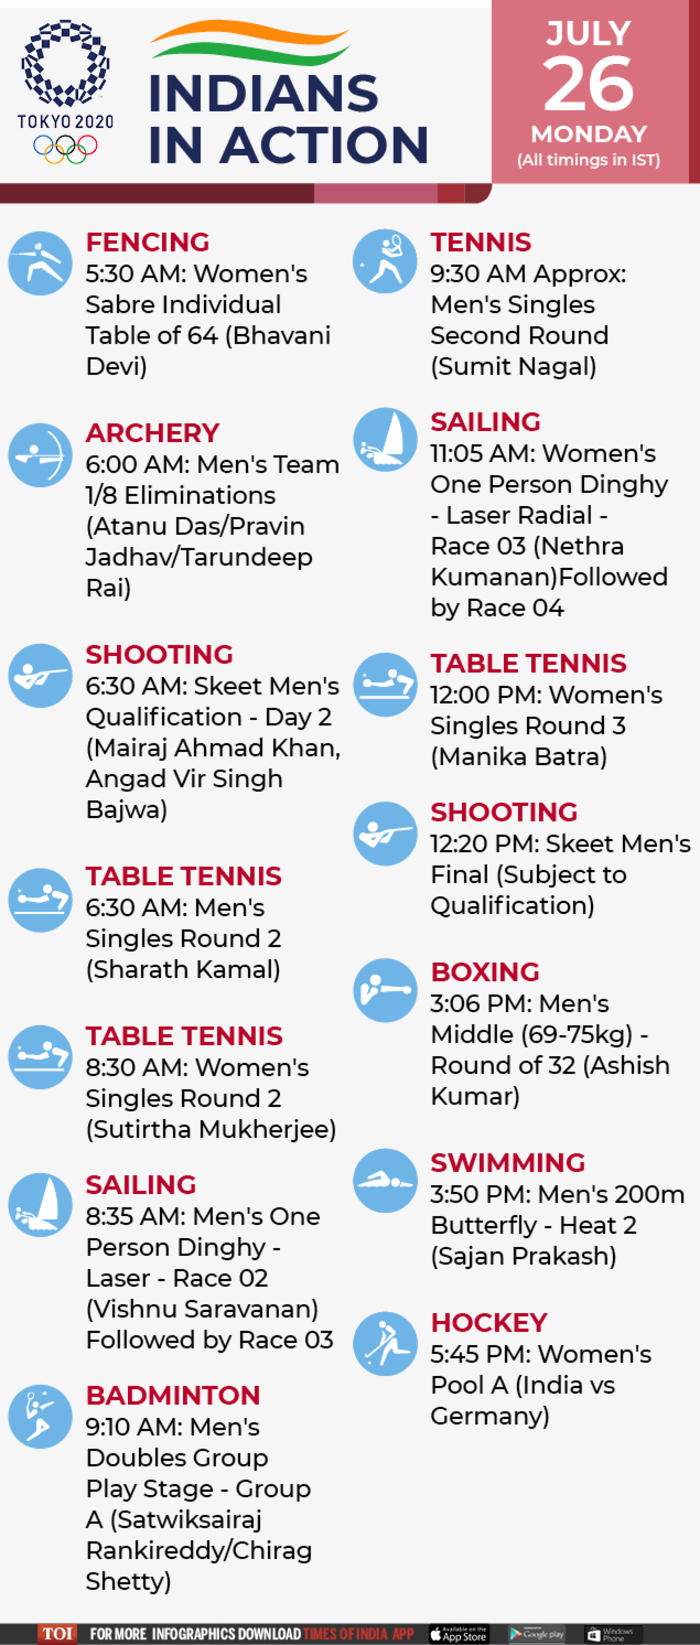 2020 schedule olympic badminton Tokyo Olympics: